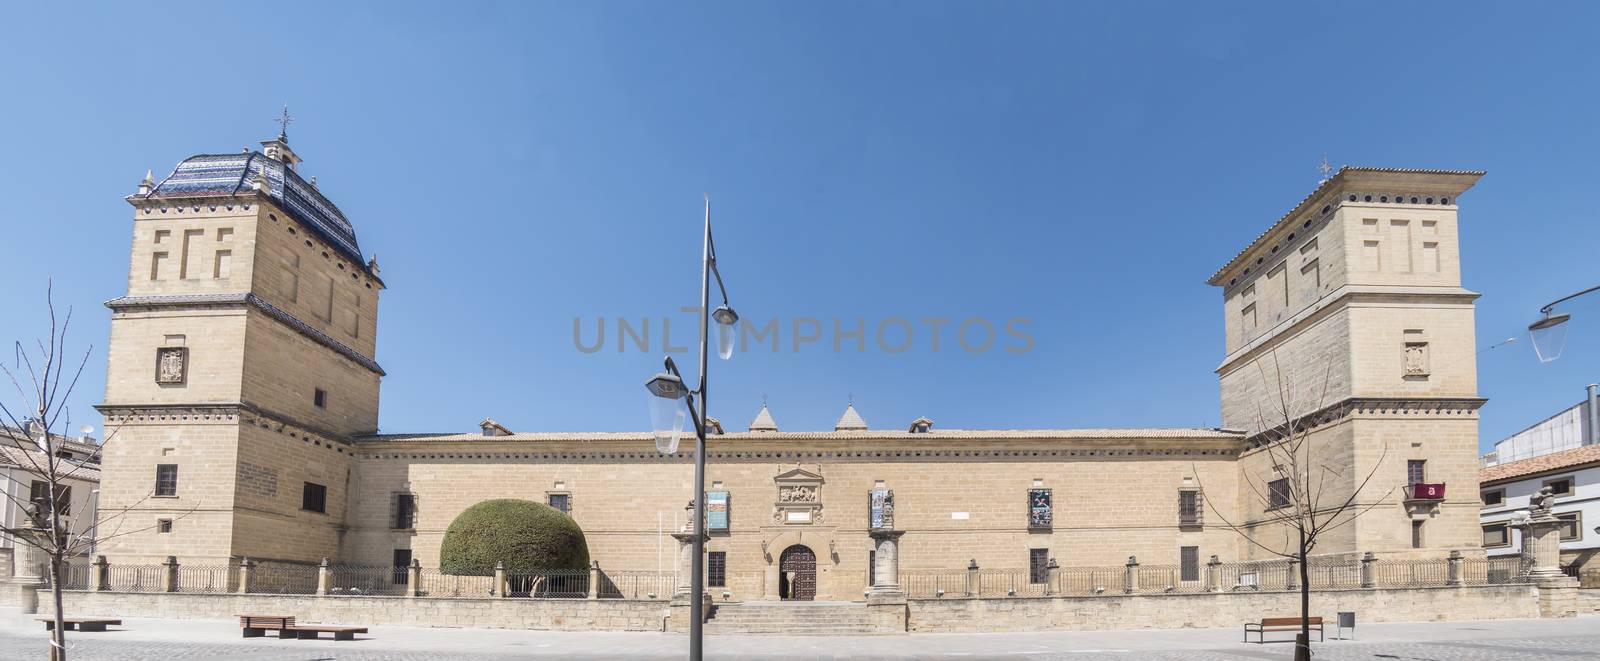 Main facade of the Hospital de Santiago, Ubeda, Jaen, Spain